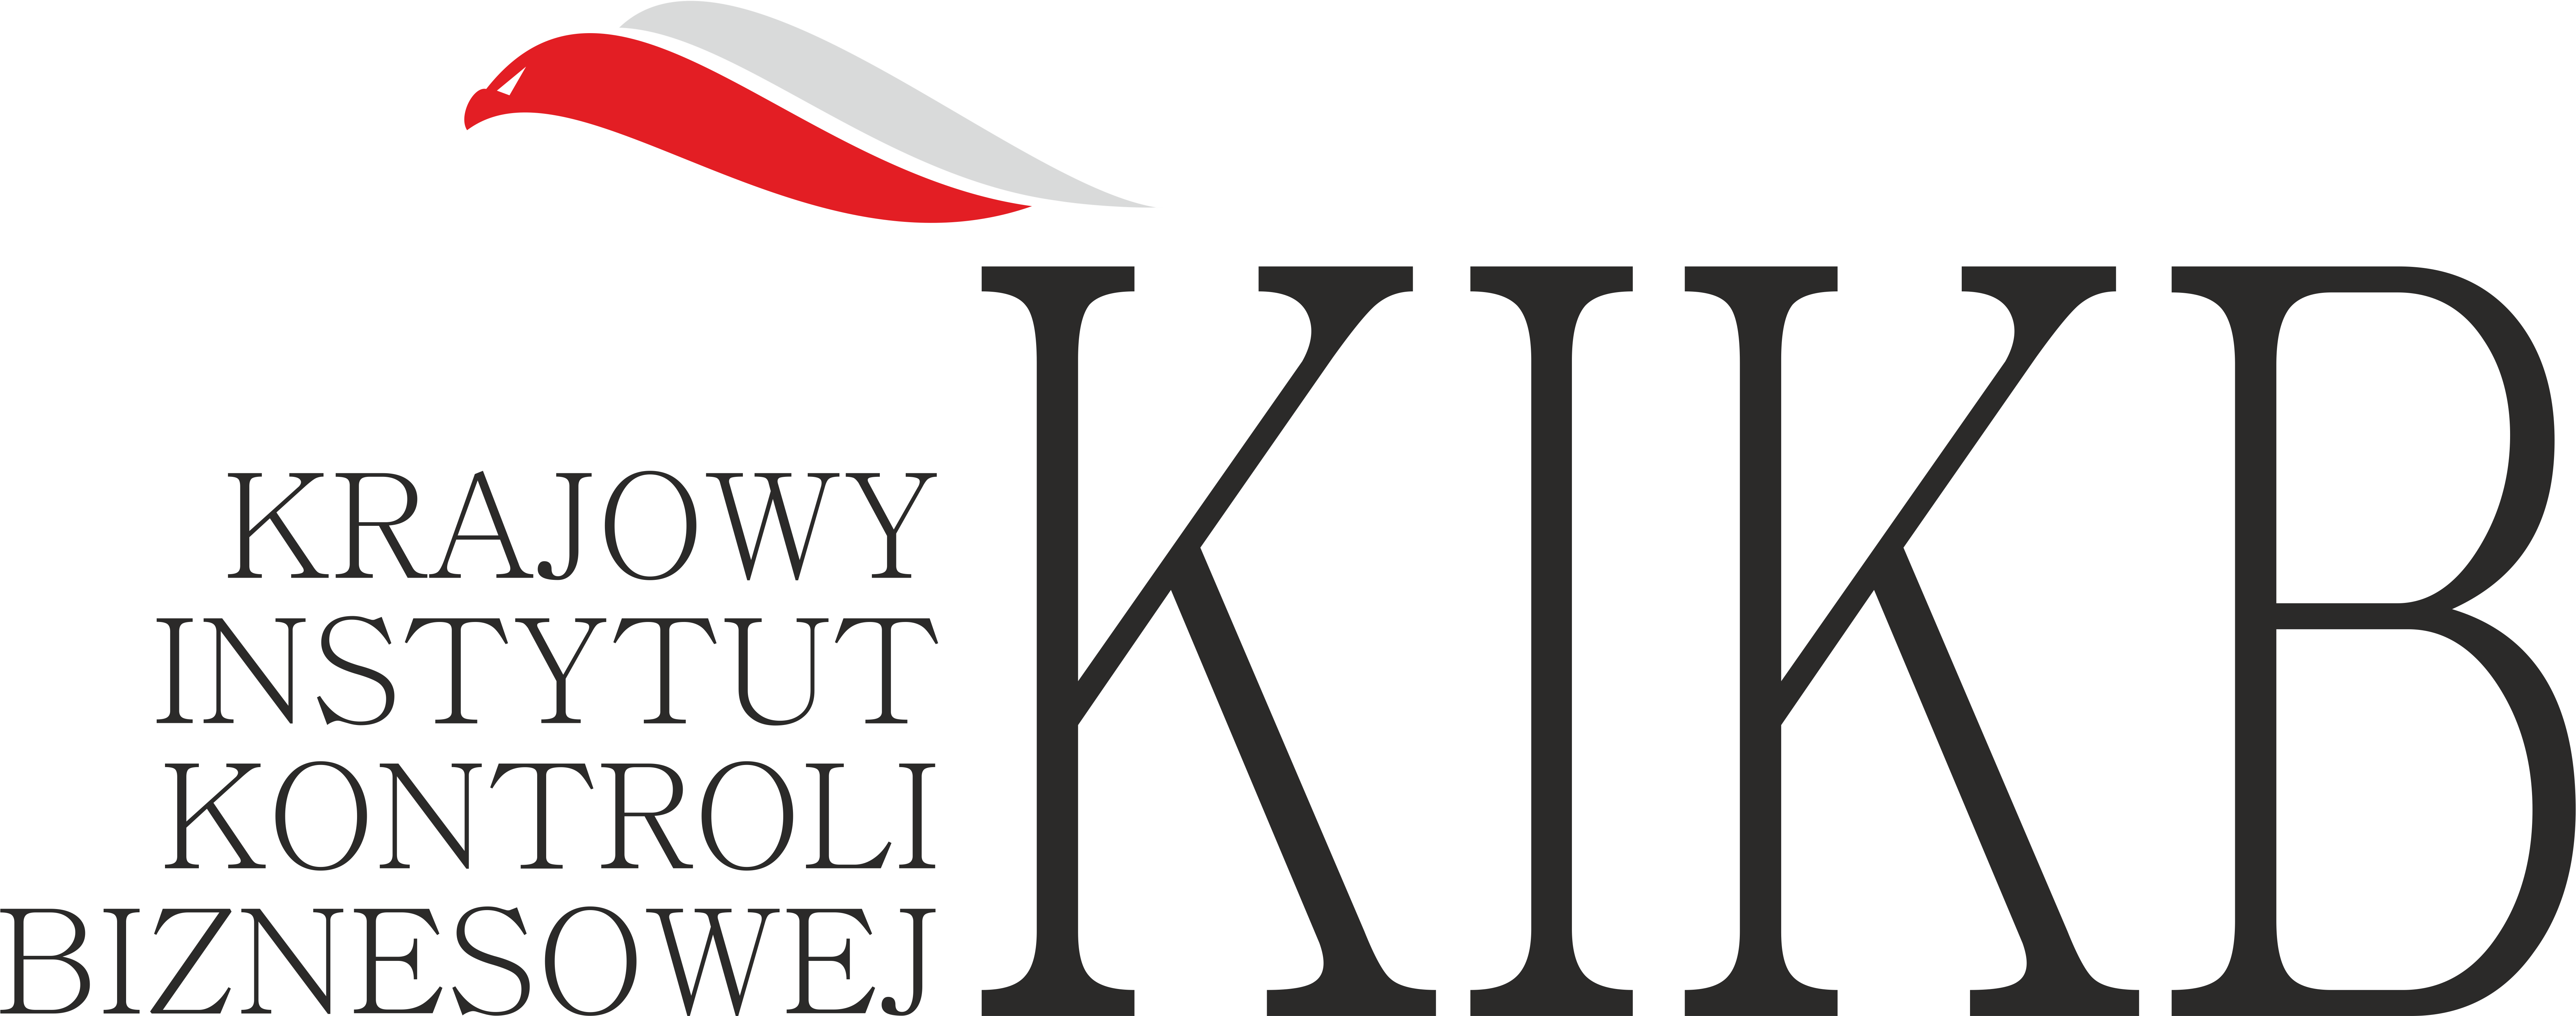 kikb_logo